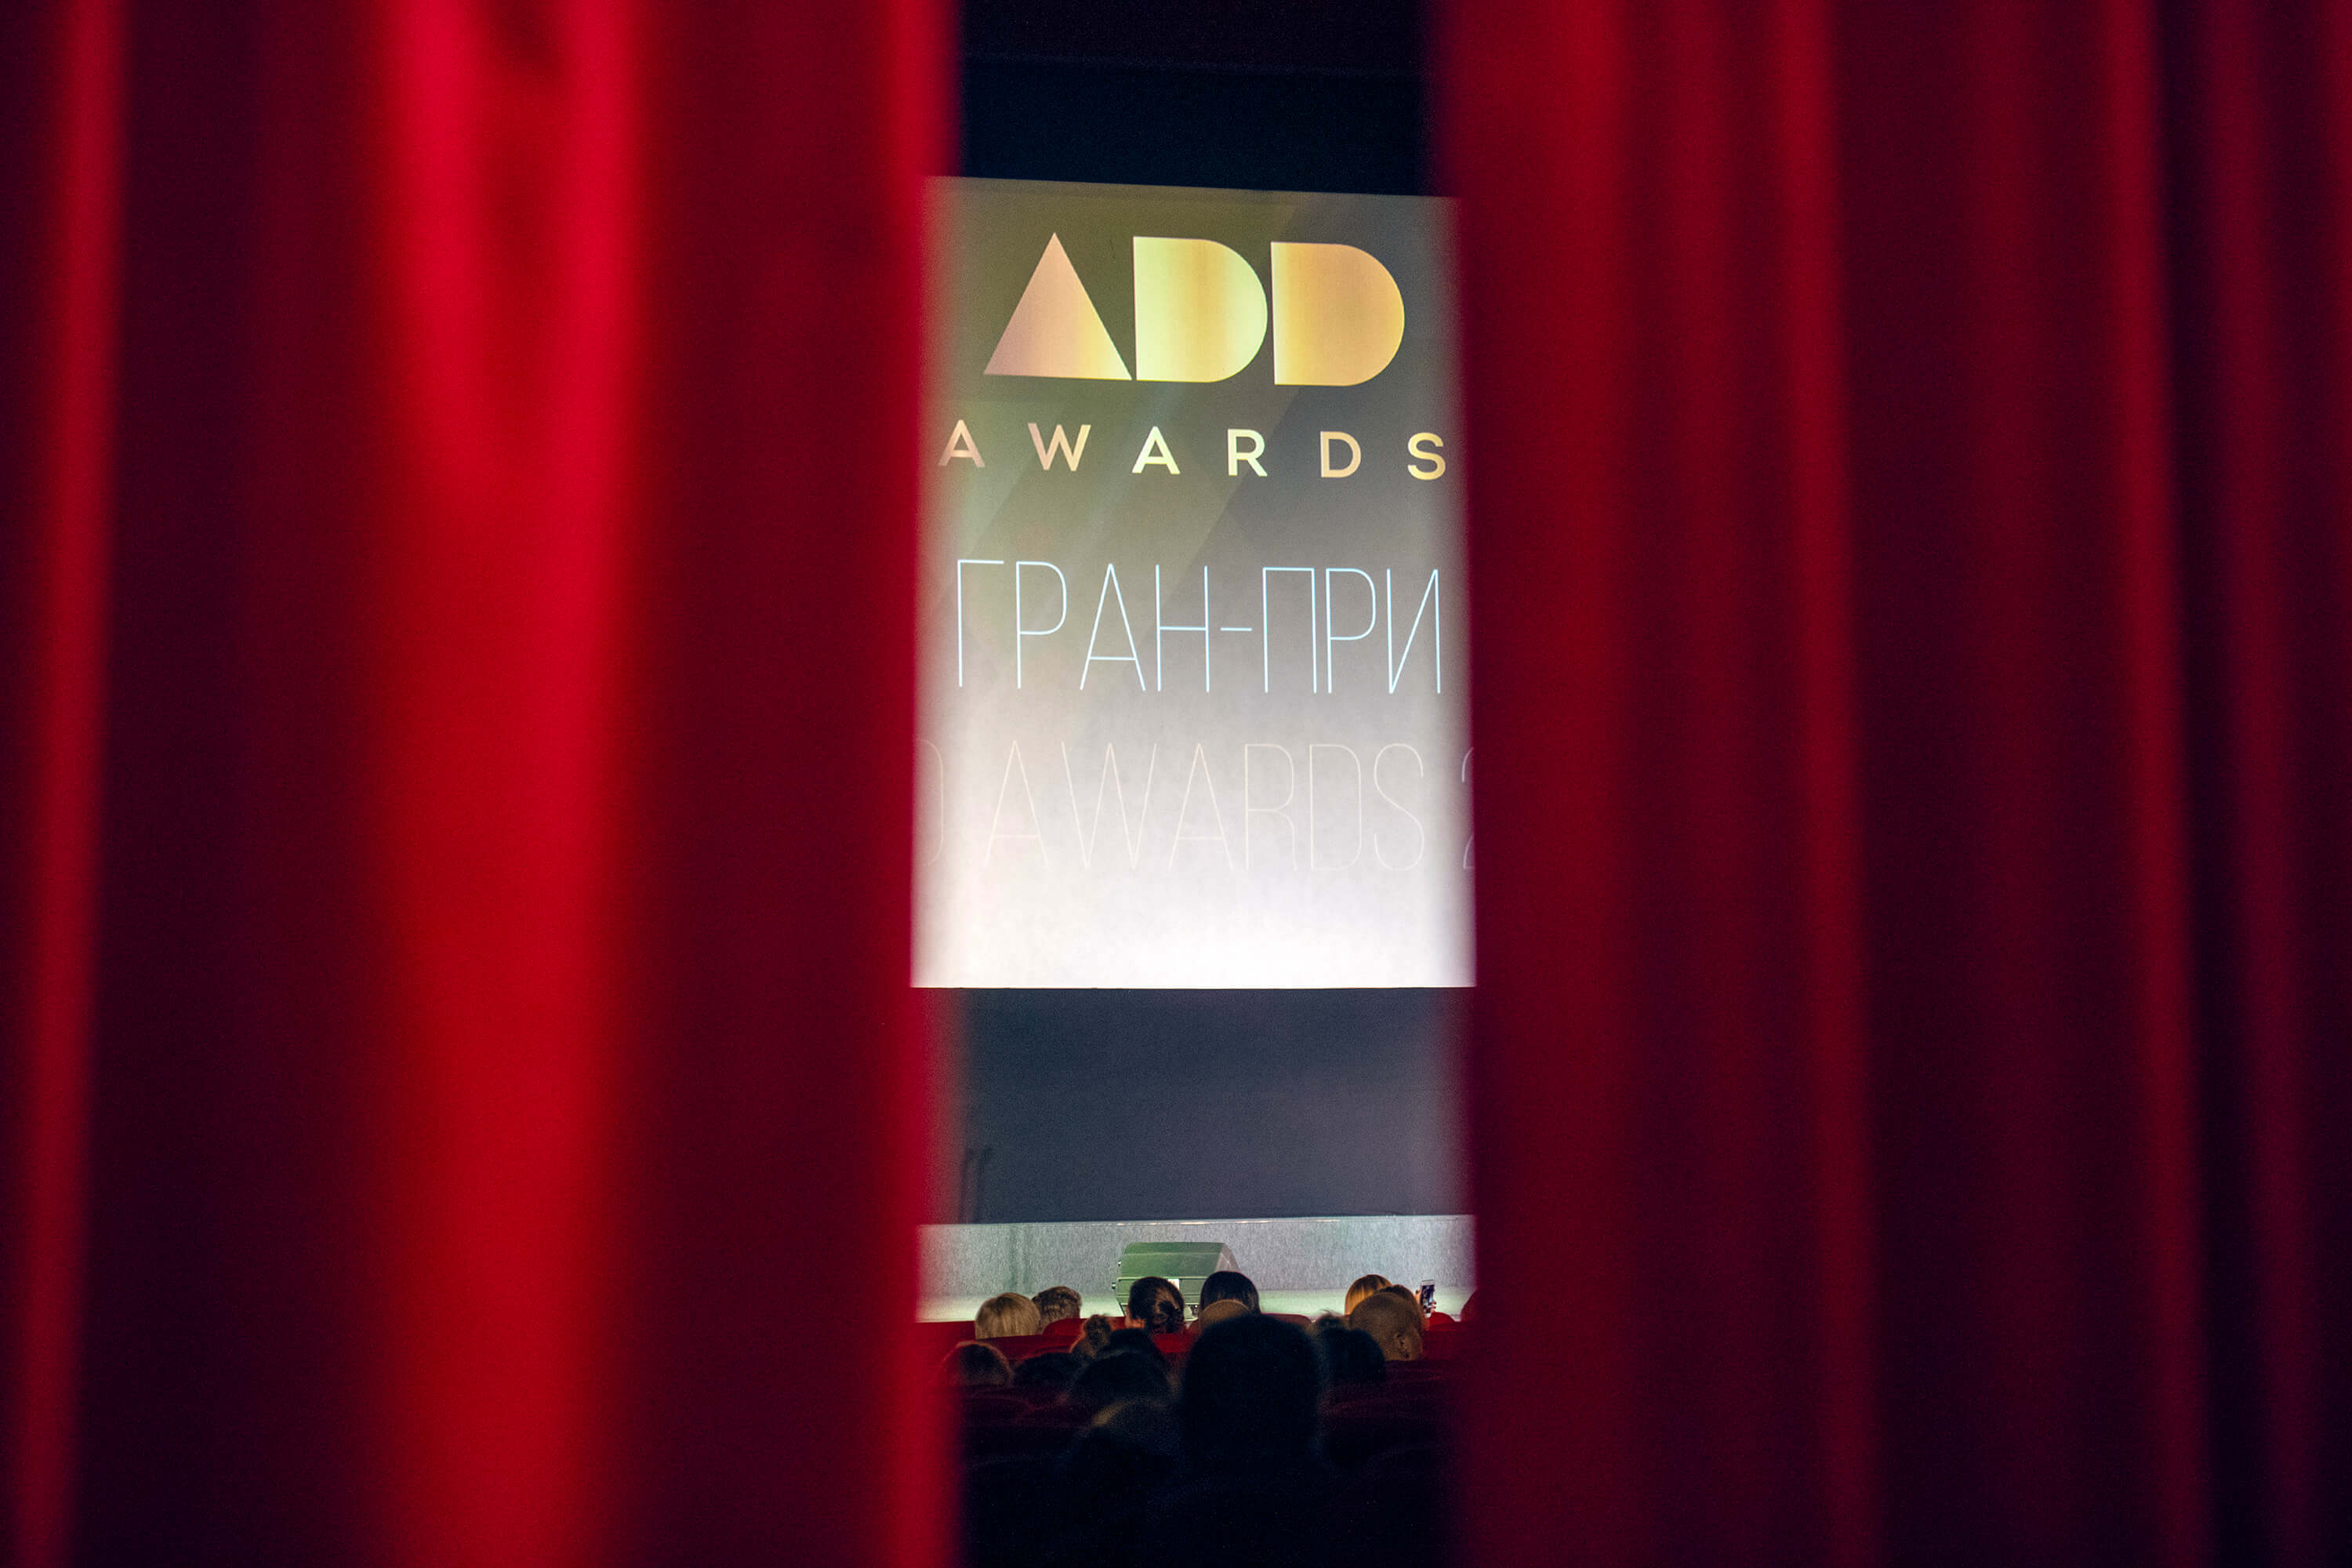 Итоги ADD Awards 2019